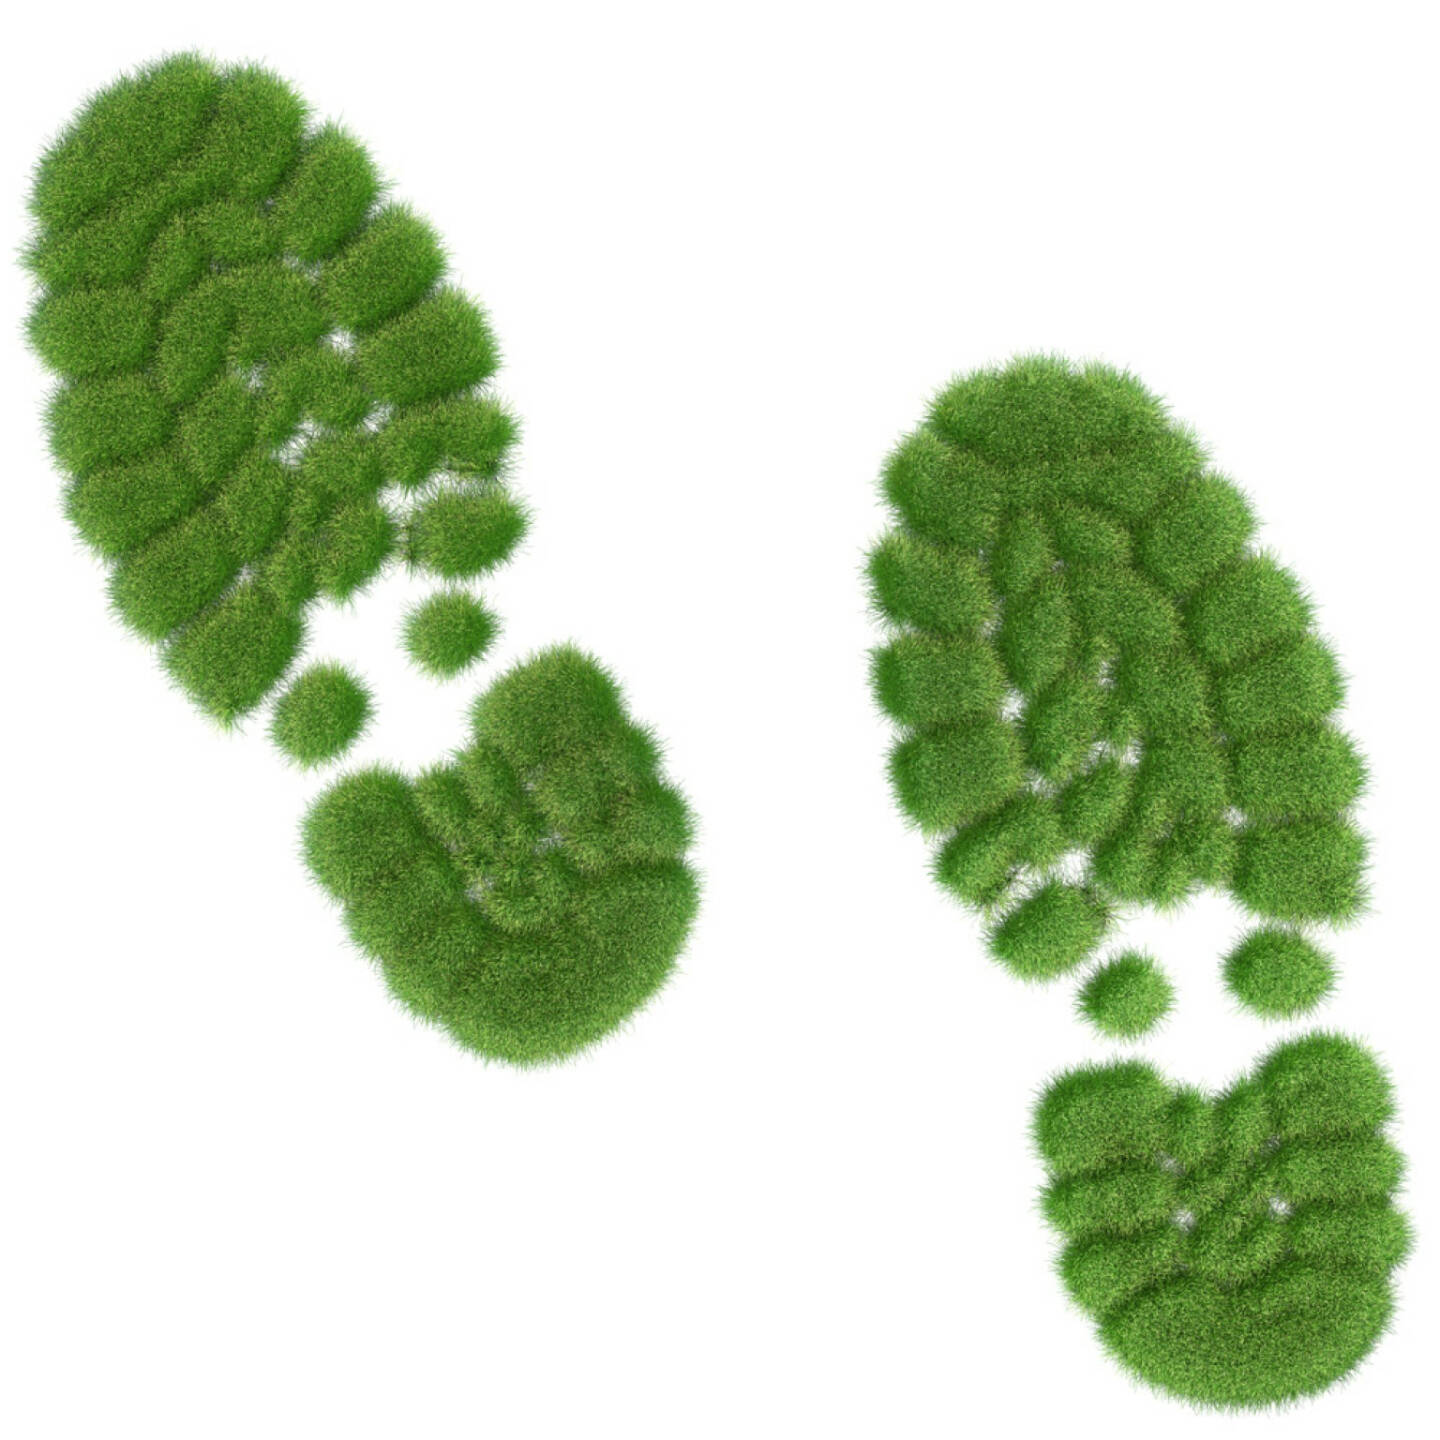 Fußabdruck, Fuss, Abdruck, grüner Fußabdruck, grün, eco, bio, Umwelt, umweltfreundlich, Öko, ökologisch, http://www.shutterstock.com/de/pic-149027984/stock-photo-green-shoe-prints-made-out-of-grass.html 